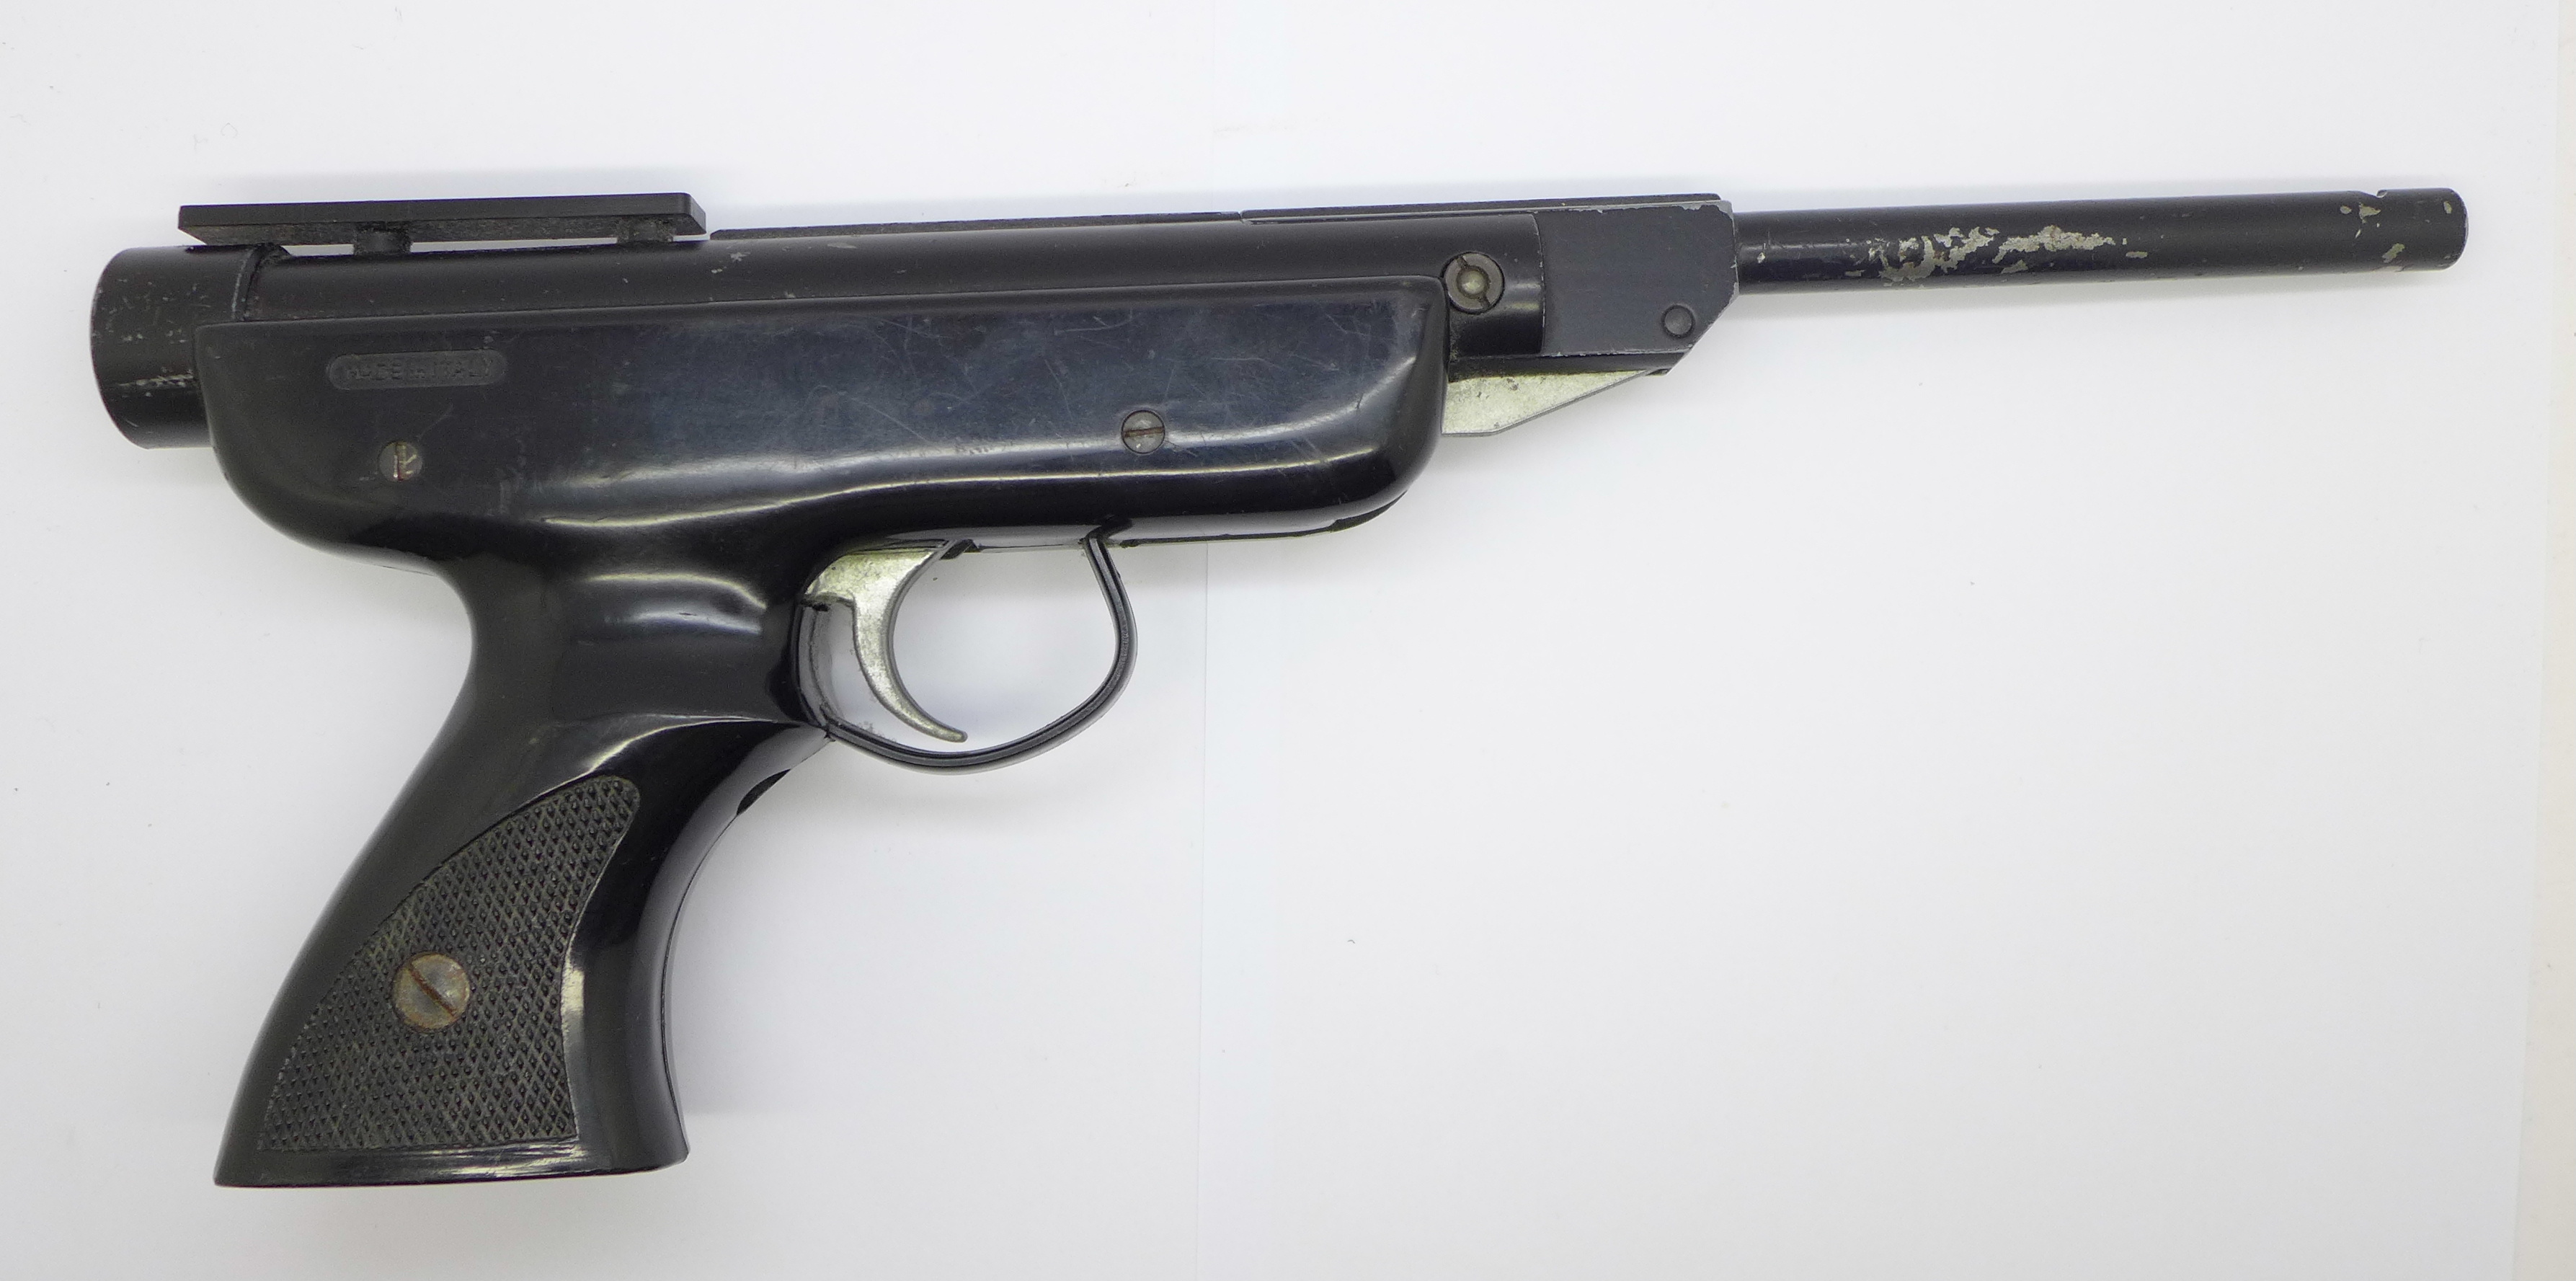 An Italian .177 calibre air pistol